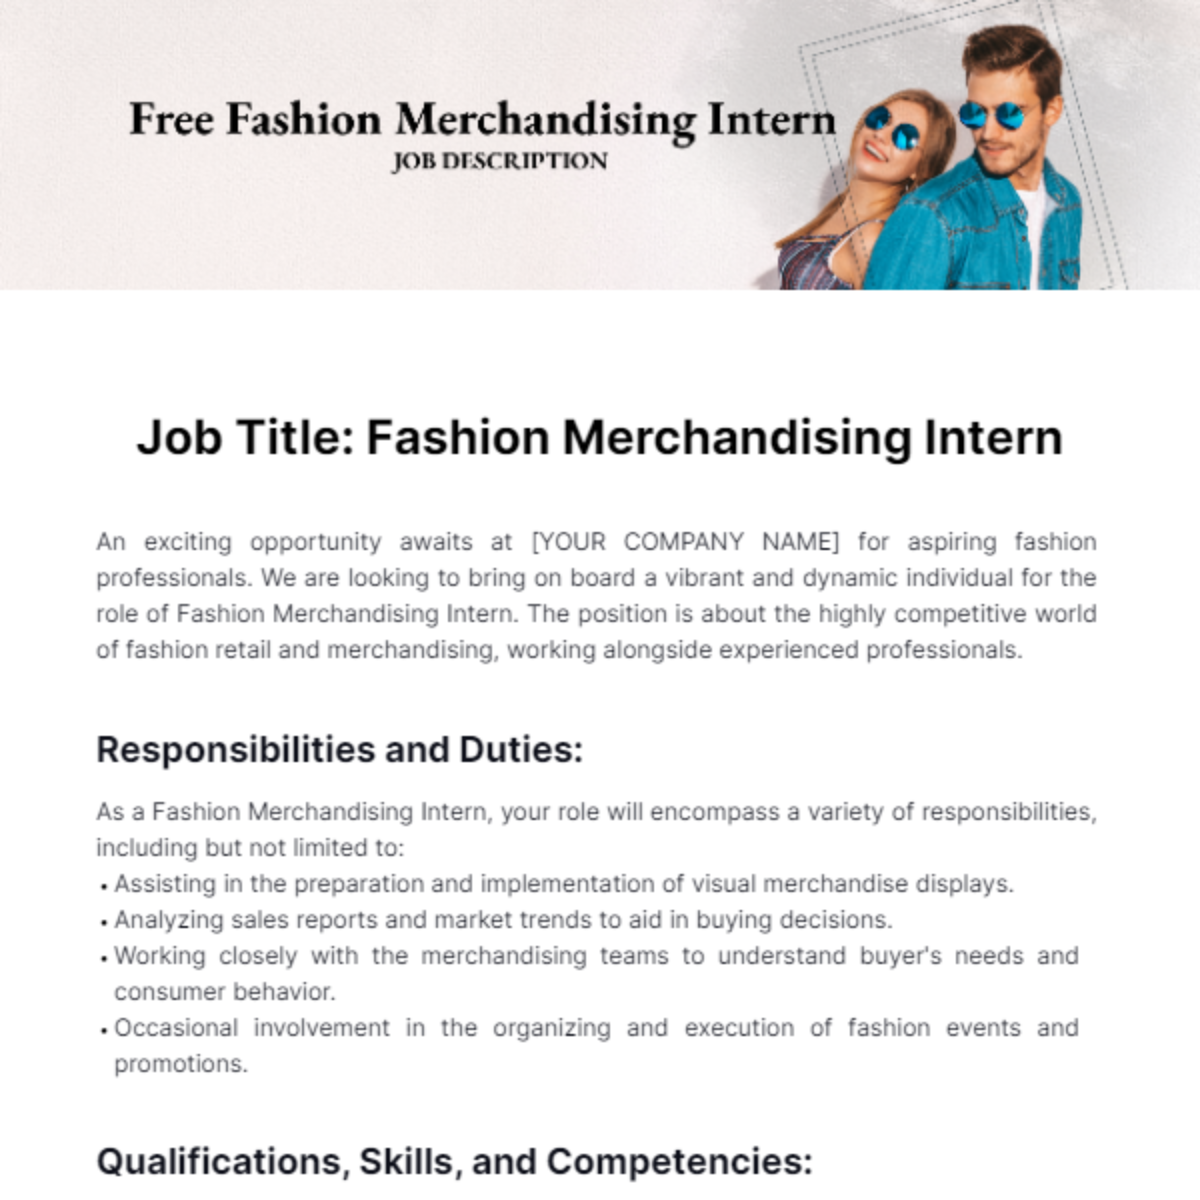 Fashion Merchandising Intern Job Description Template - Edit Online ...